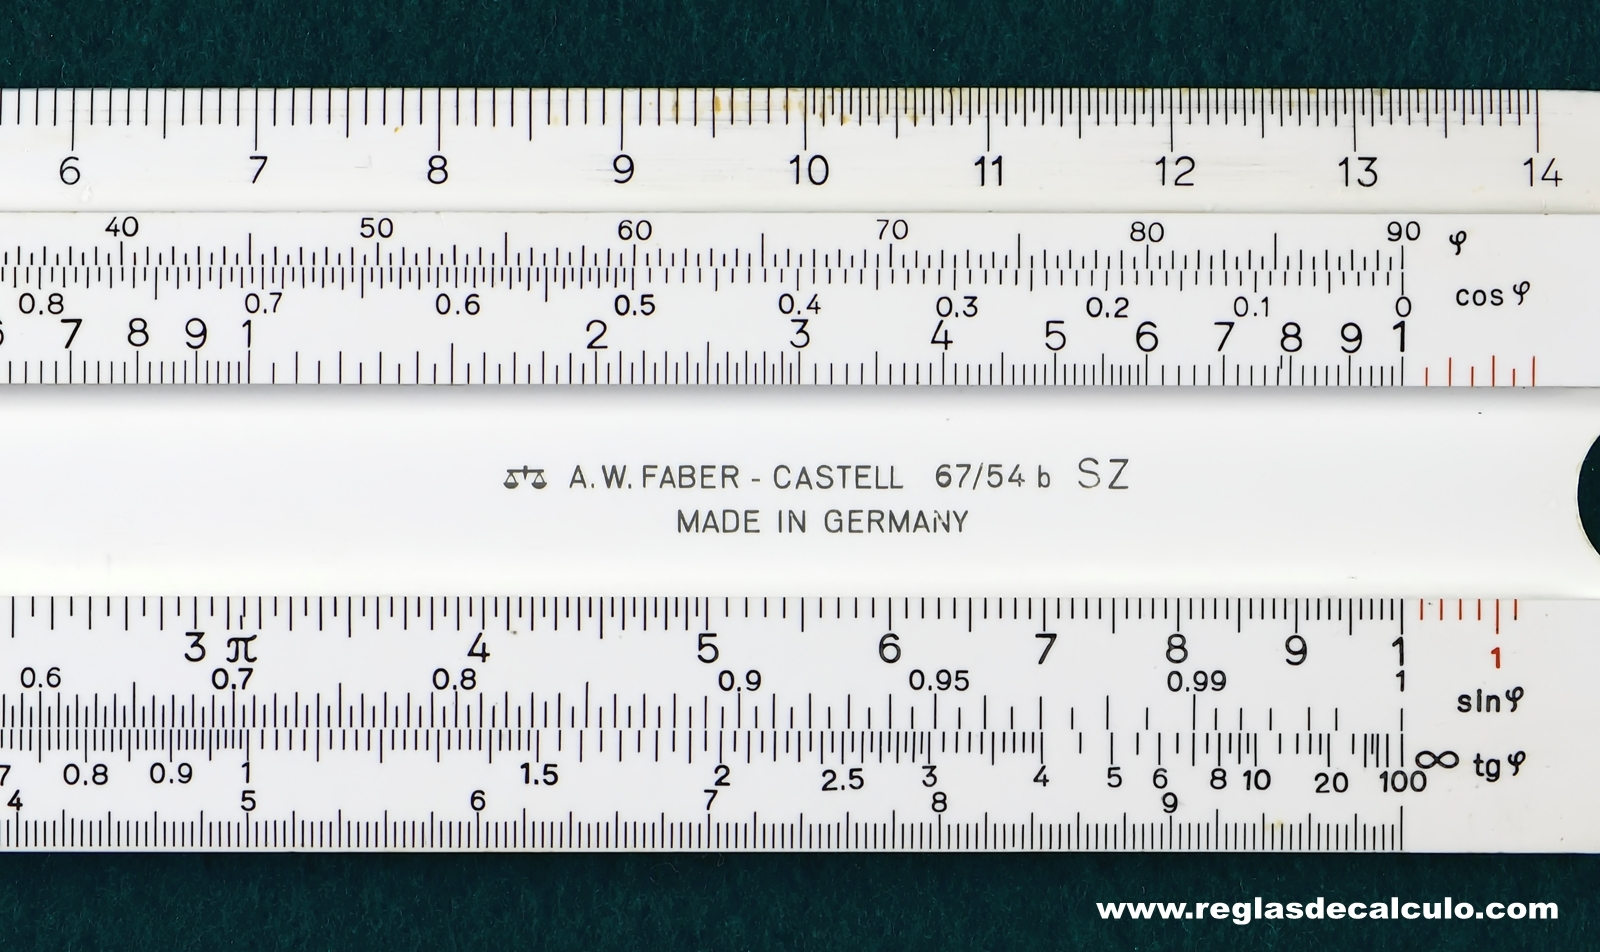 Faber Castell 67/54b SZ Regla de Calculo Slide rule